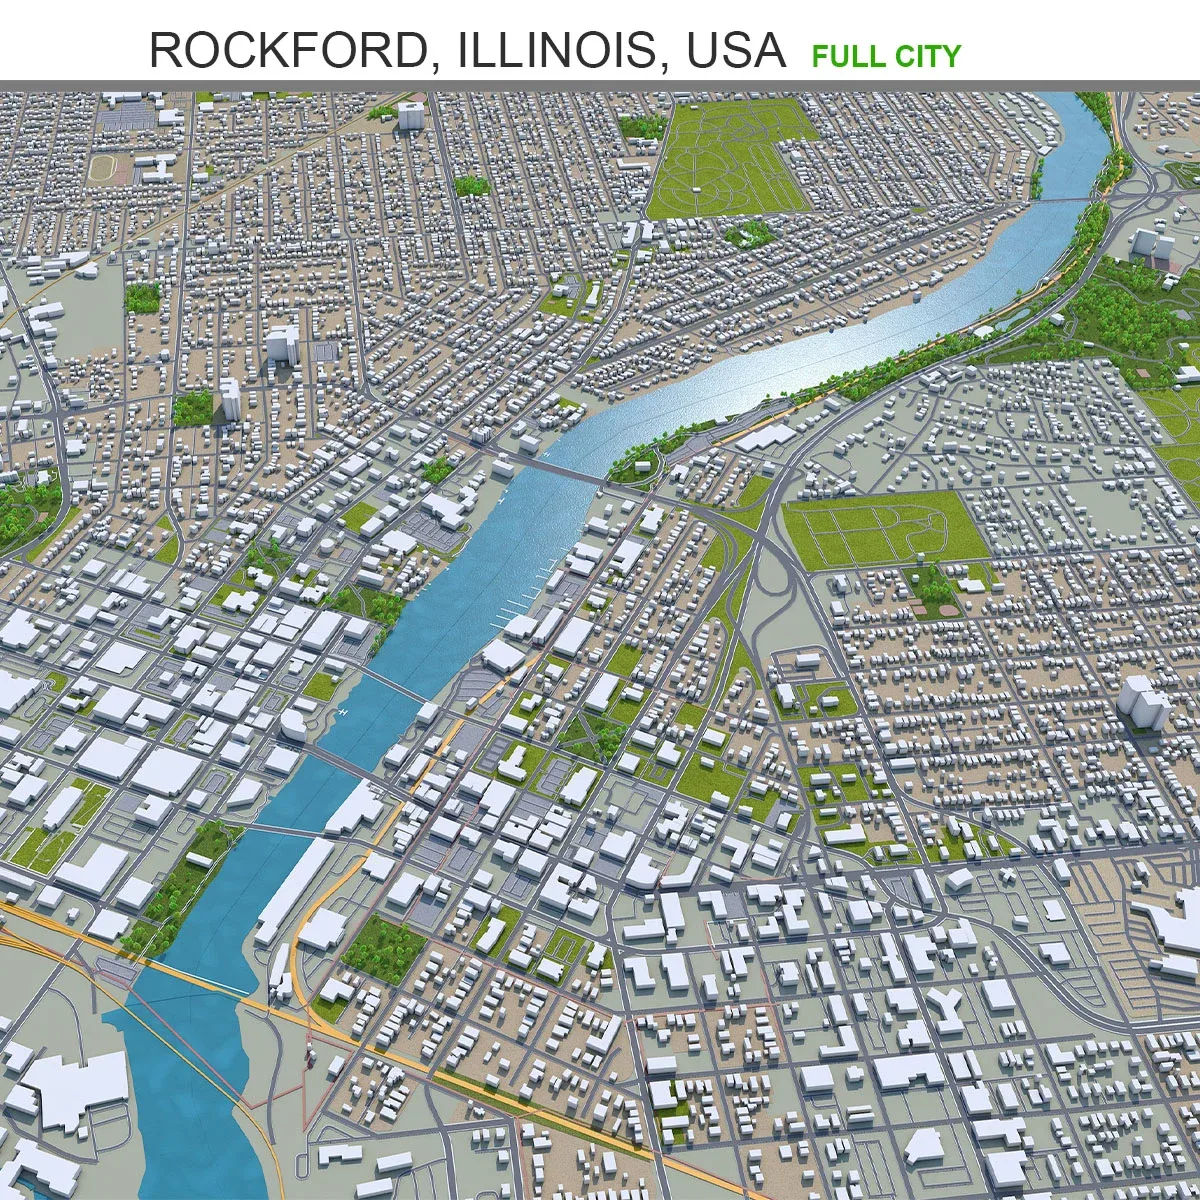 Rockford city Illinois USA 3d model 35km